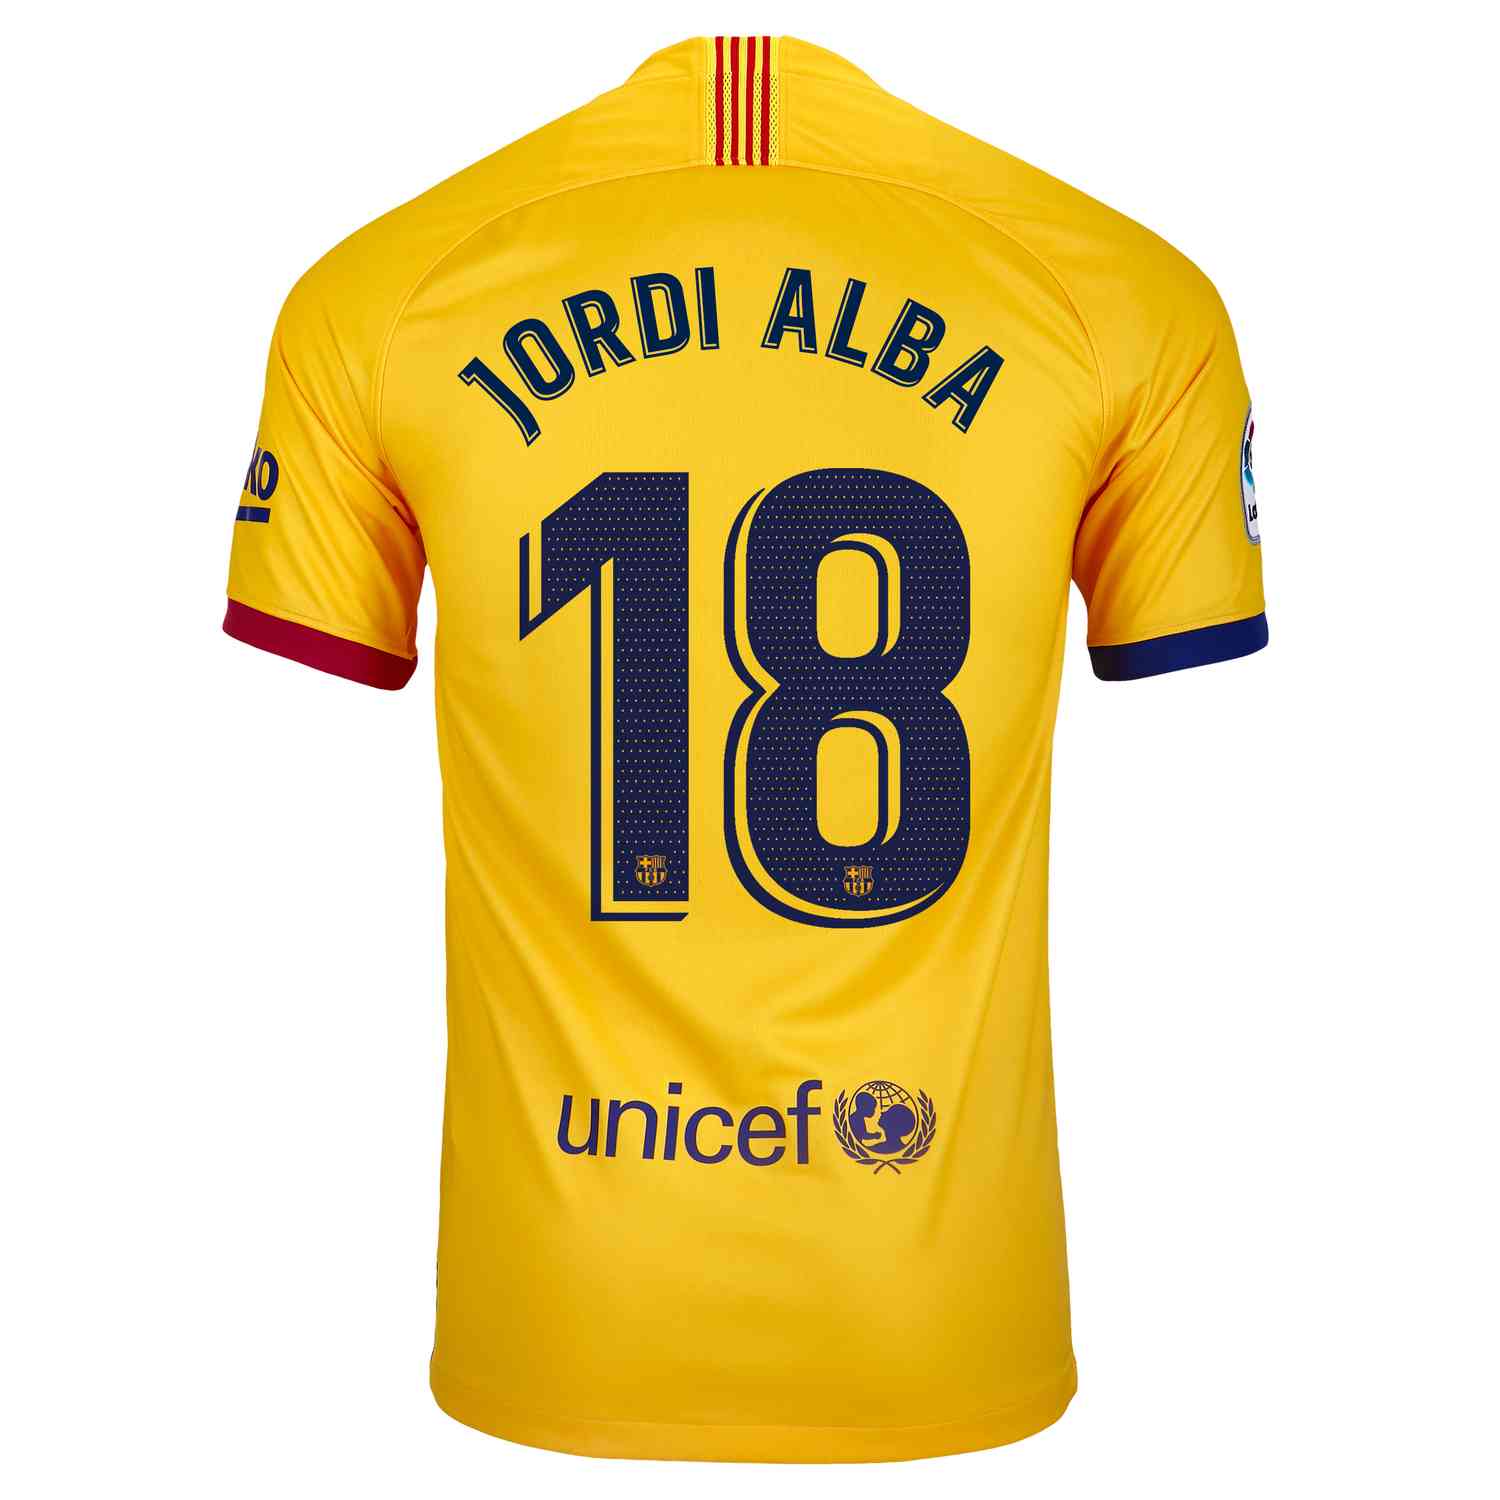 alba jersey number